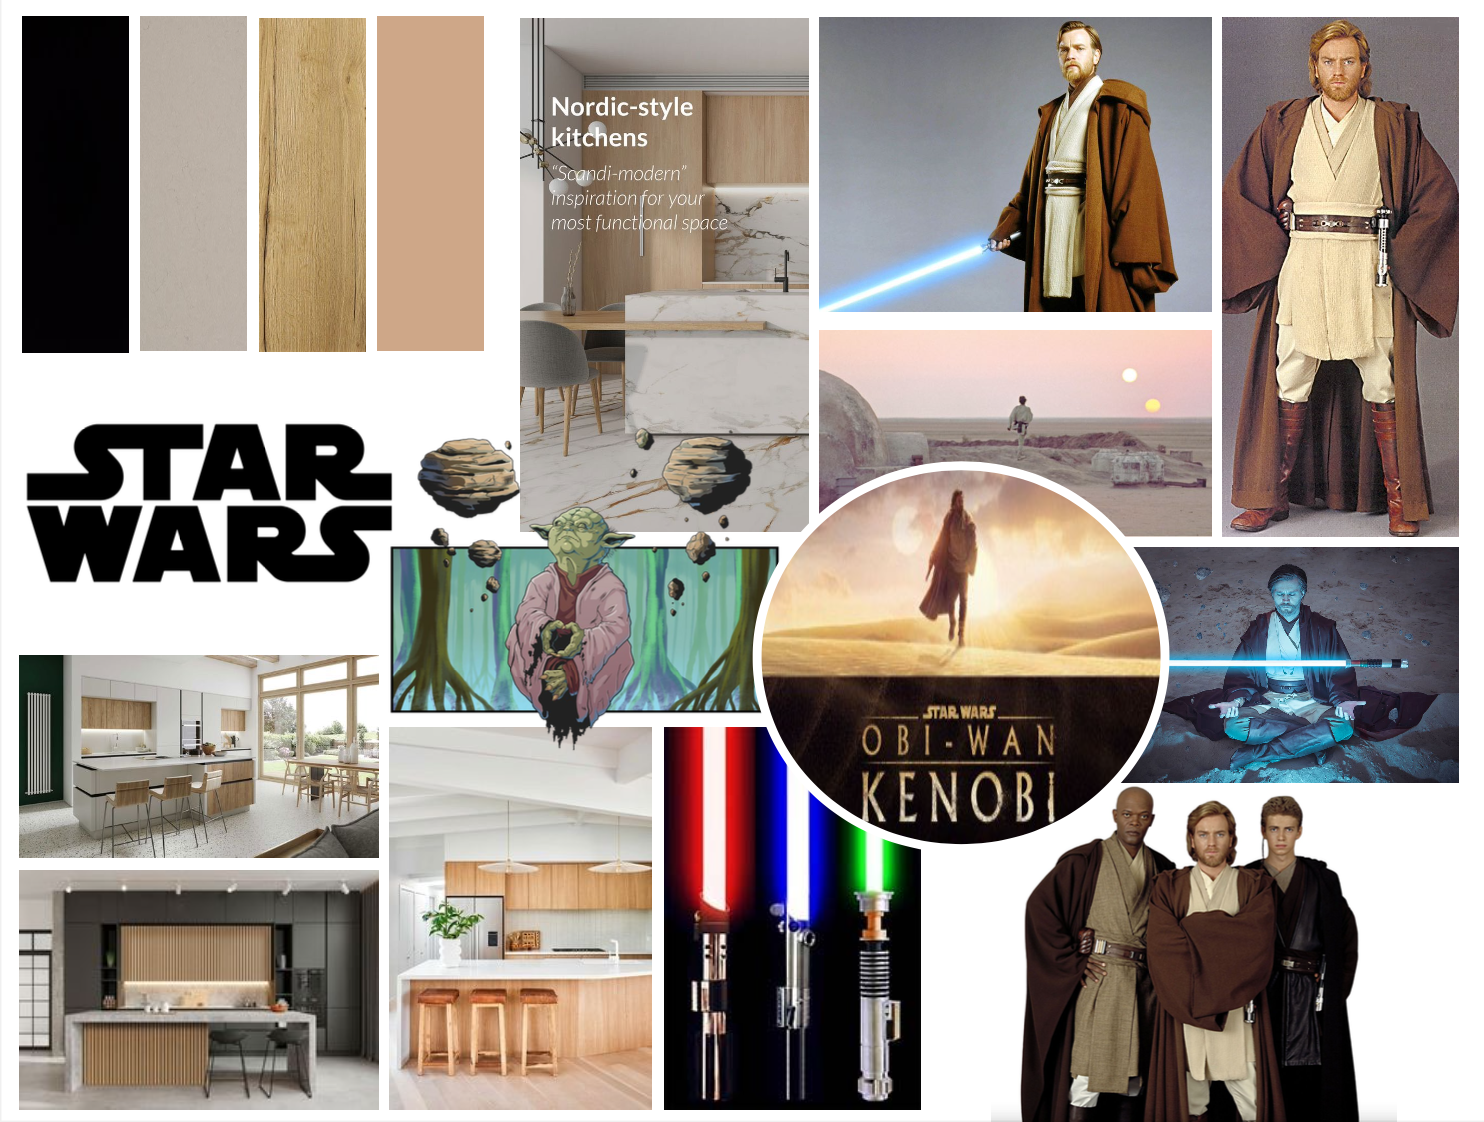 Star Wars home kitchen mood board inspiration